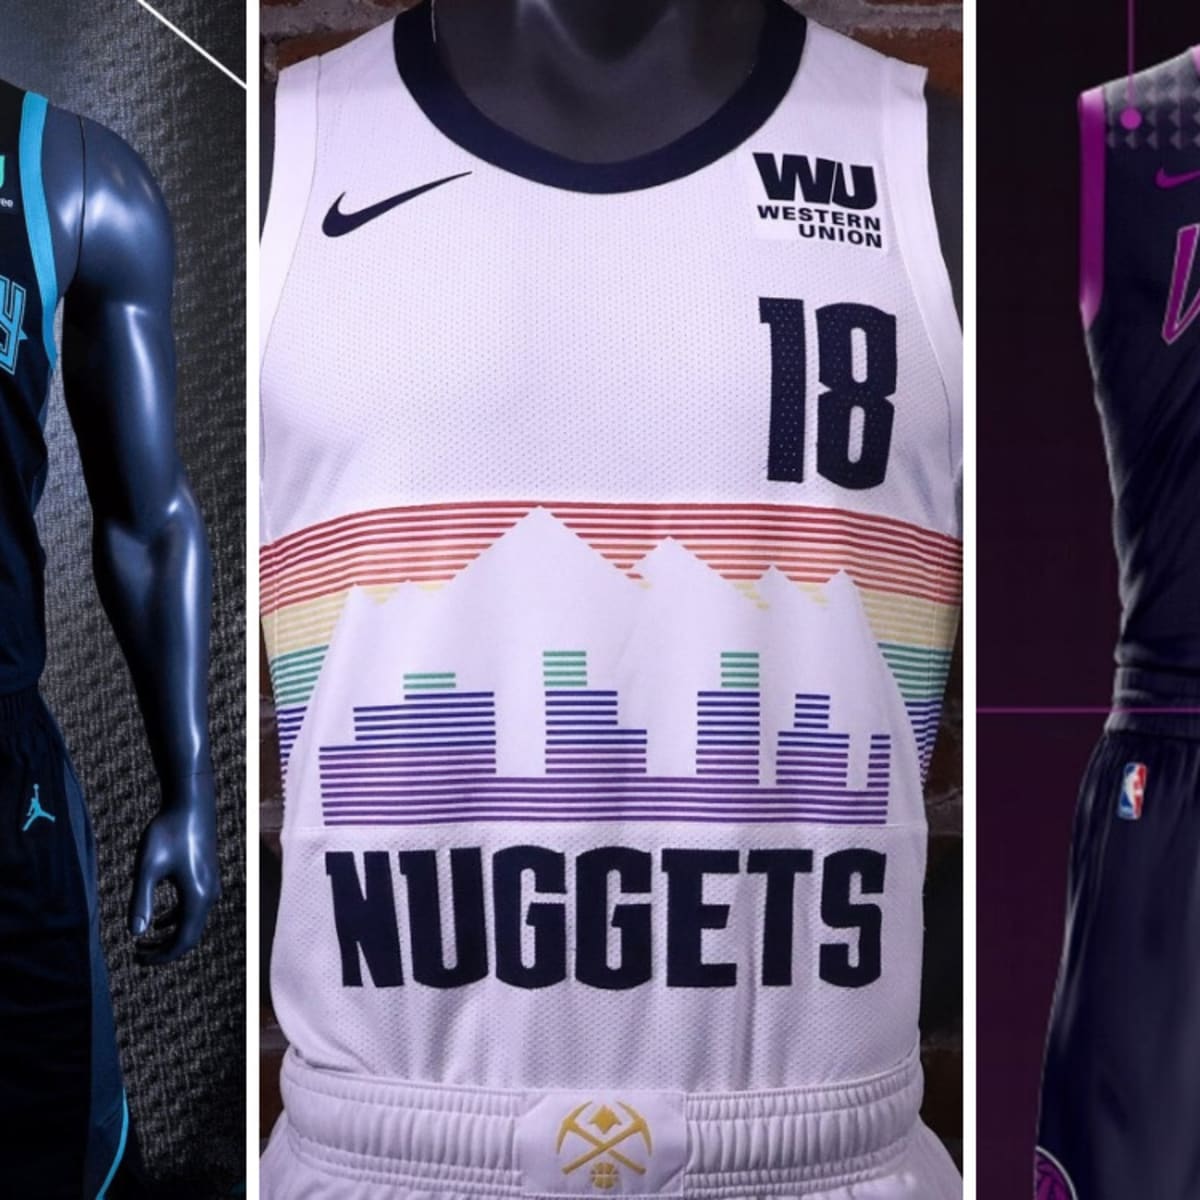 NBA City Edition jerseys: Best, worst uniforms (photos) - Sports